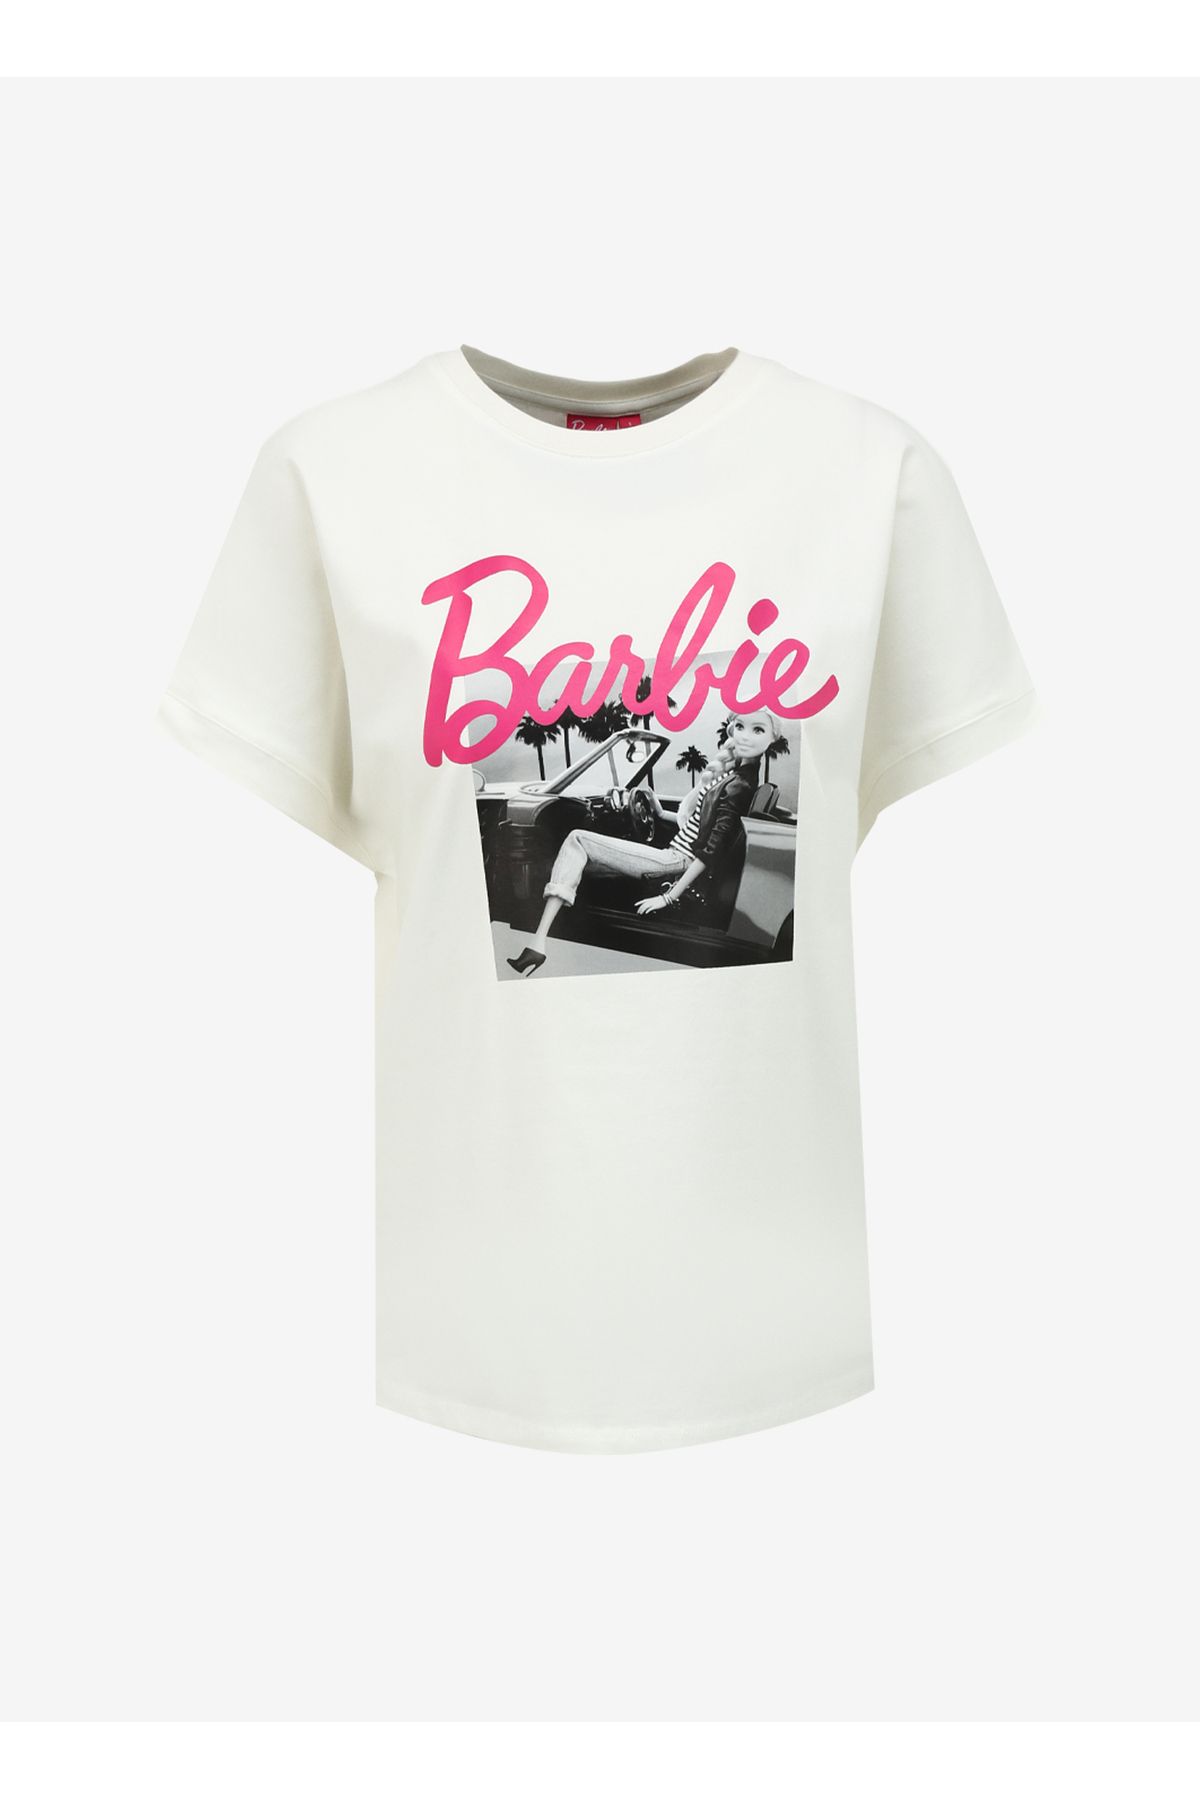 Barbie Bisiklet Yaka Baskılı Ekru Kadın T-Shirt BRB4SL-TST6090